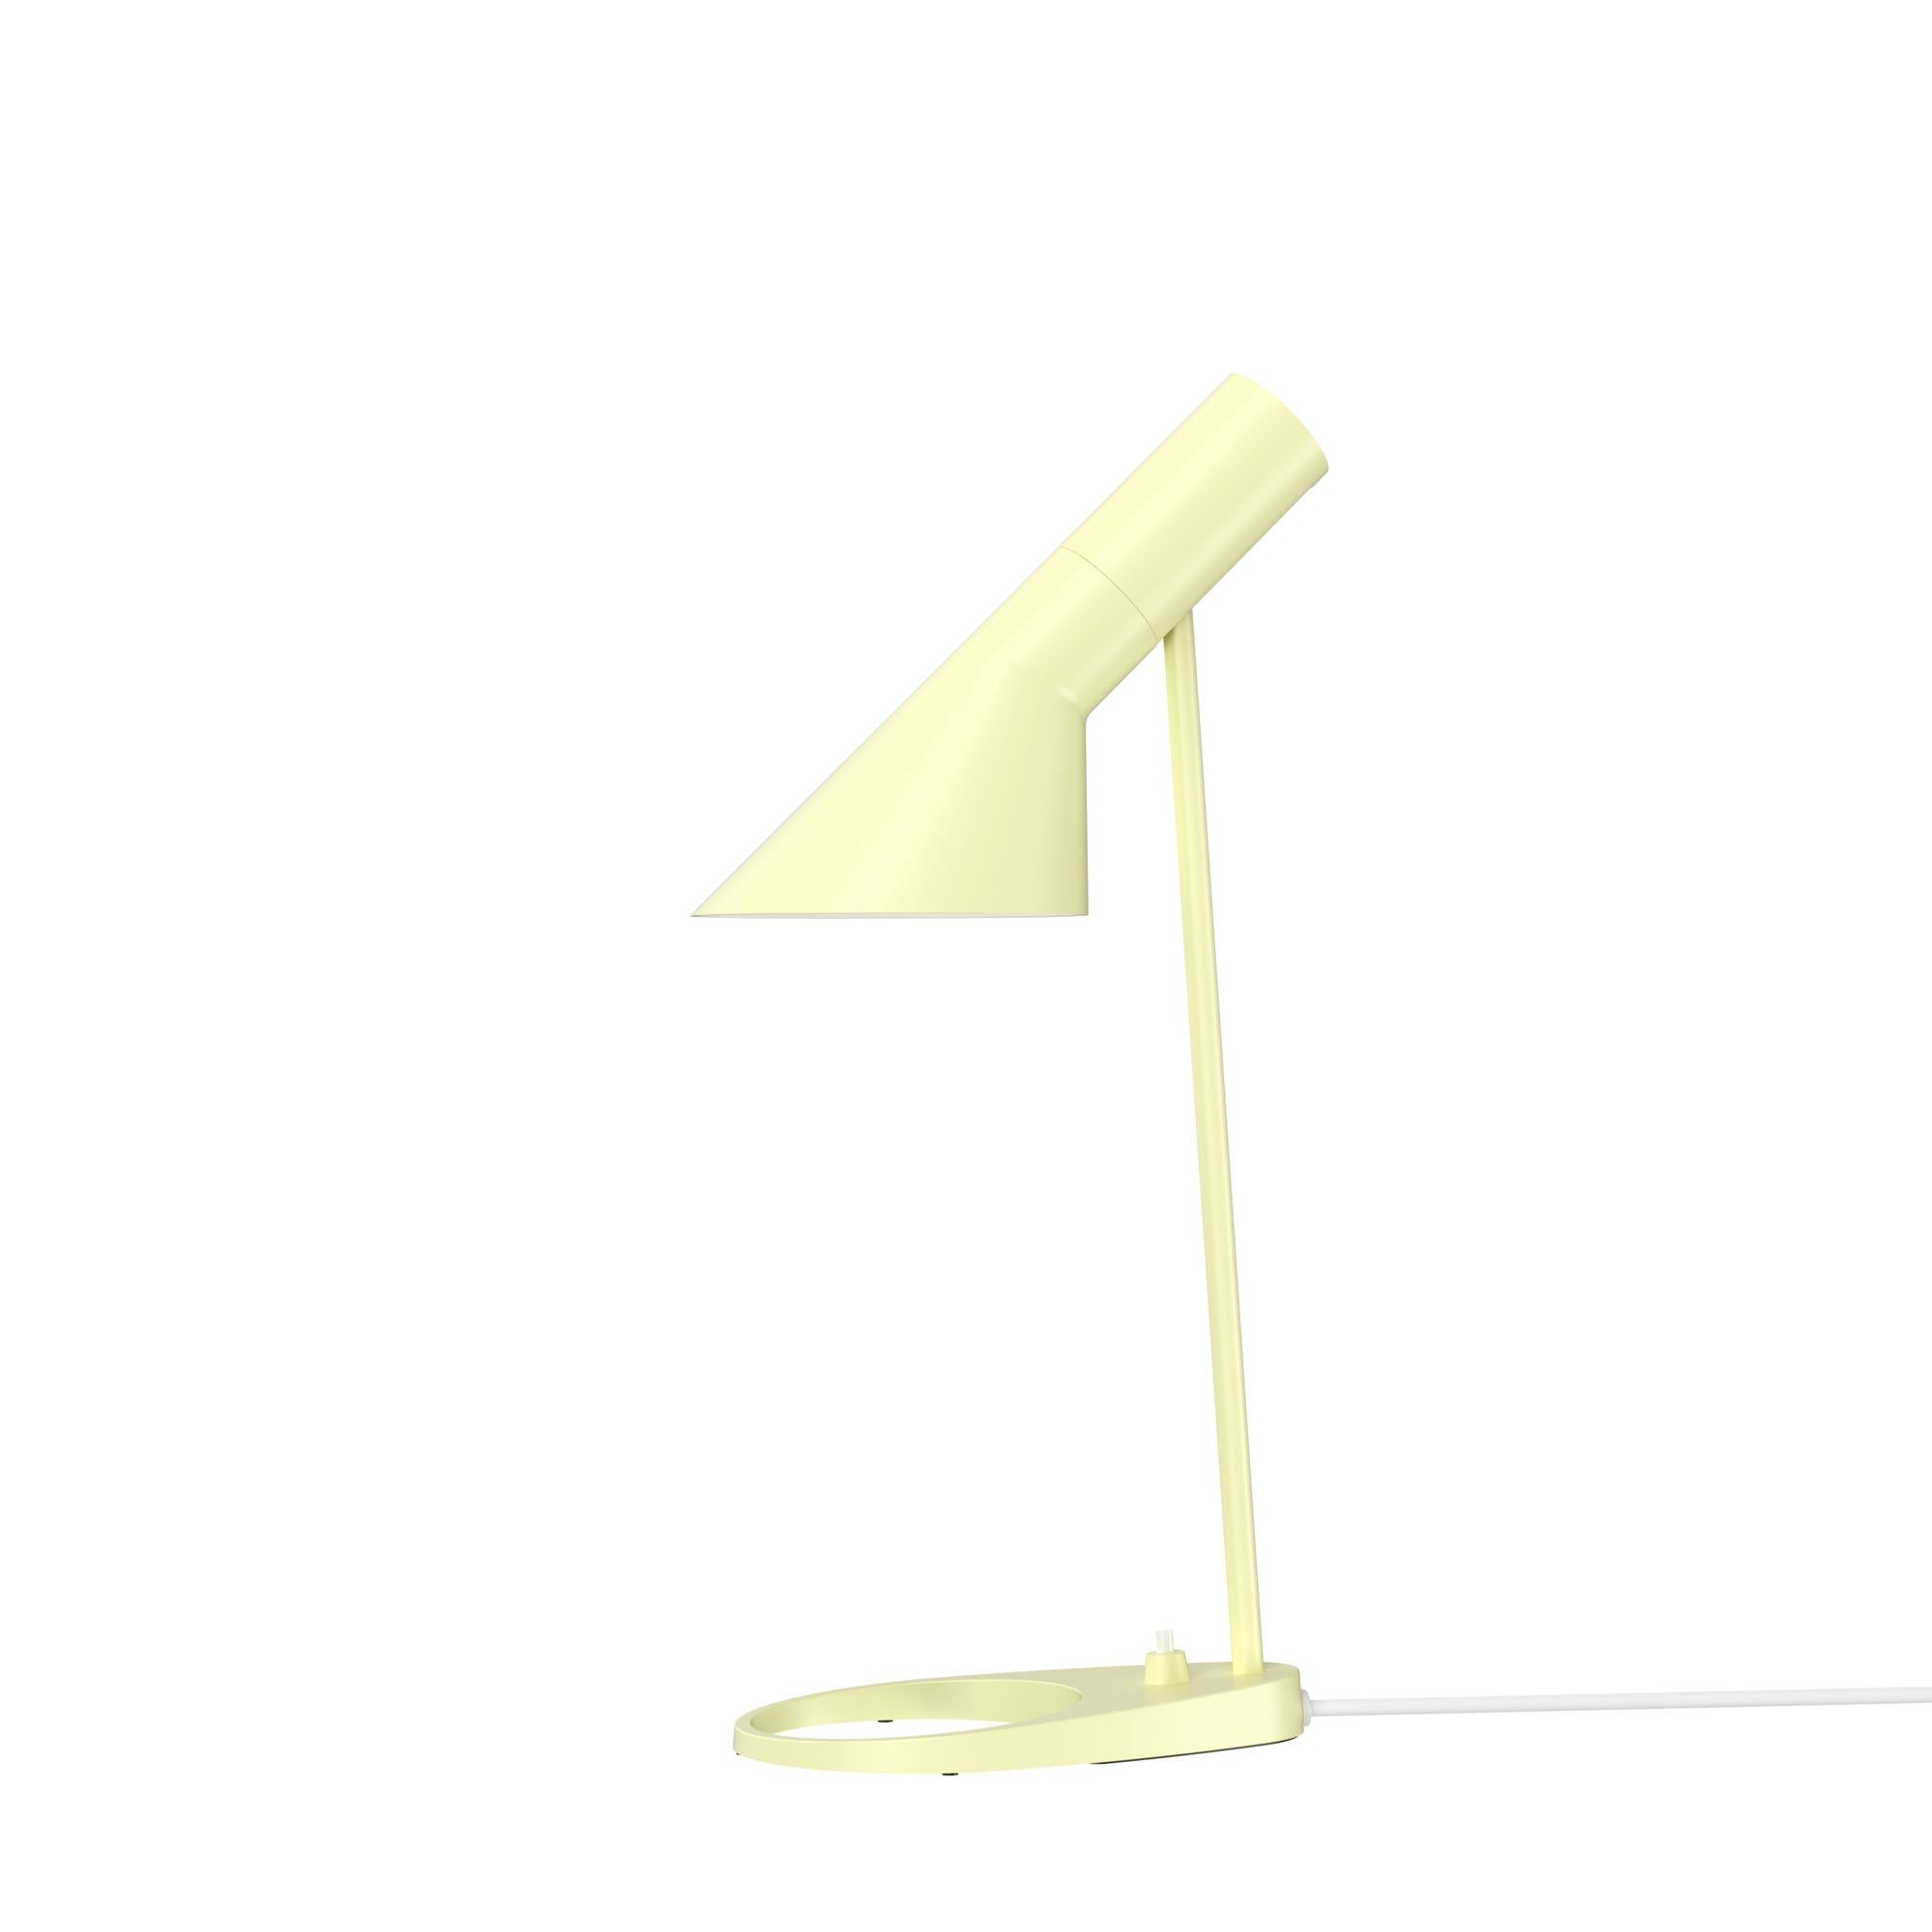 Arne Jacobsen 'Aj Mini' Table Lamp in Electric Orange for Louis Poulsen For Sale 6